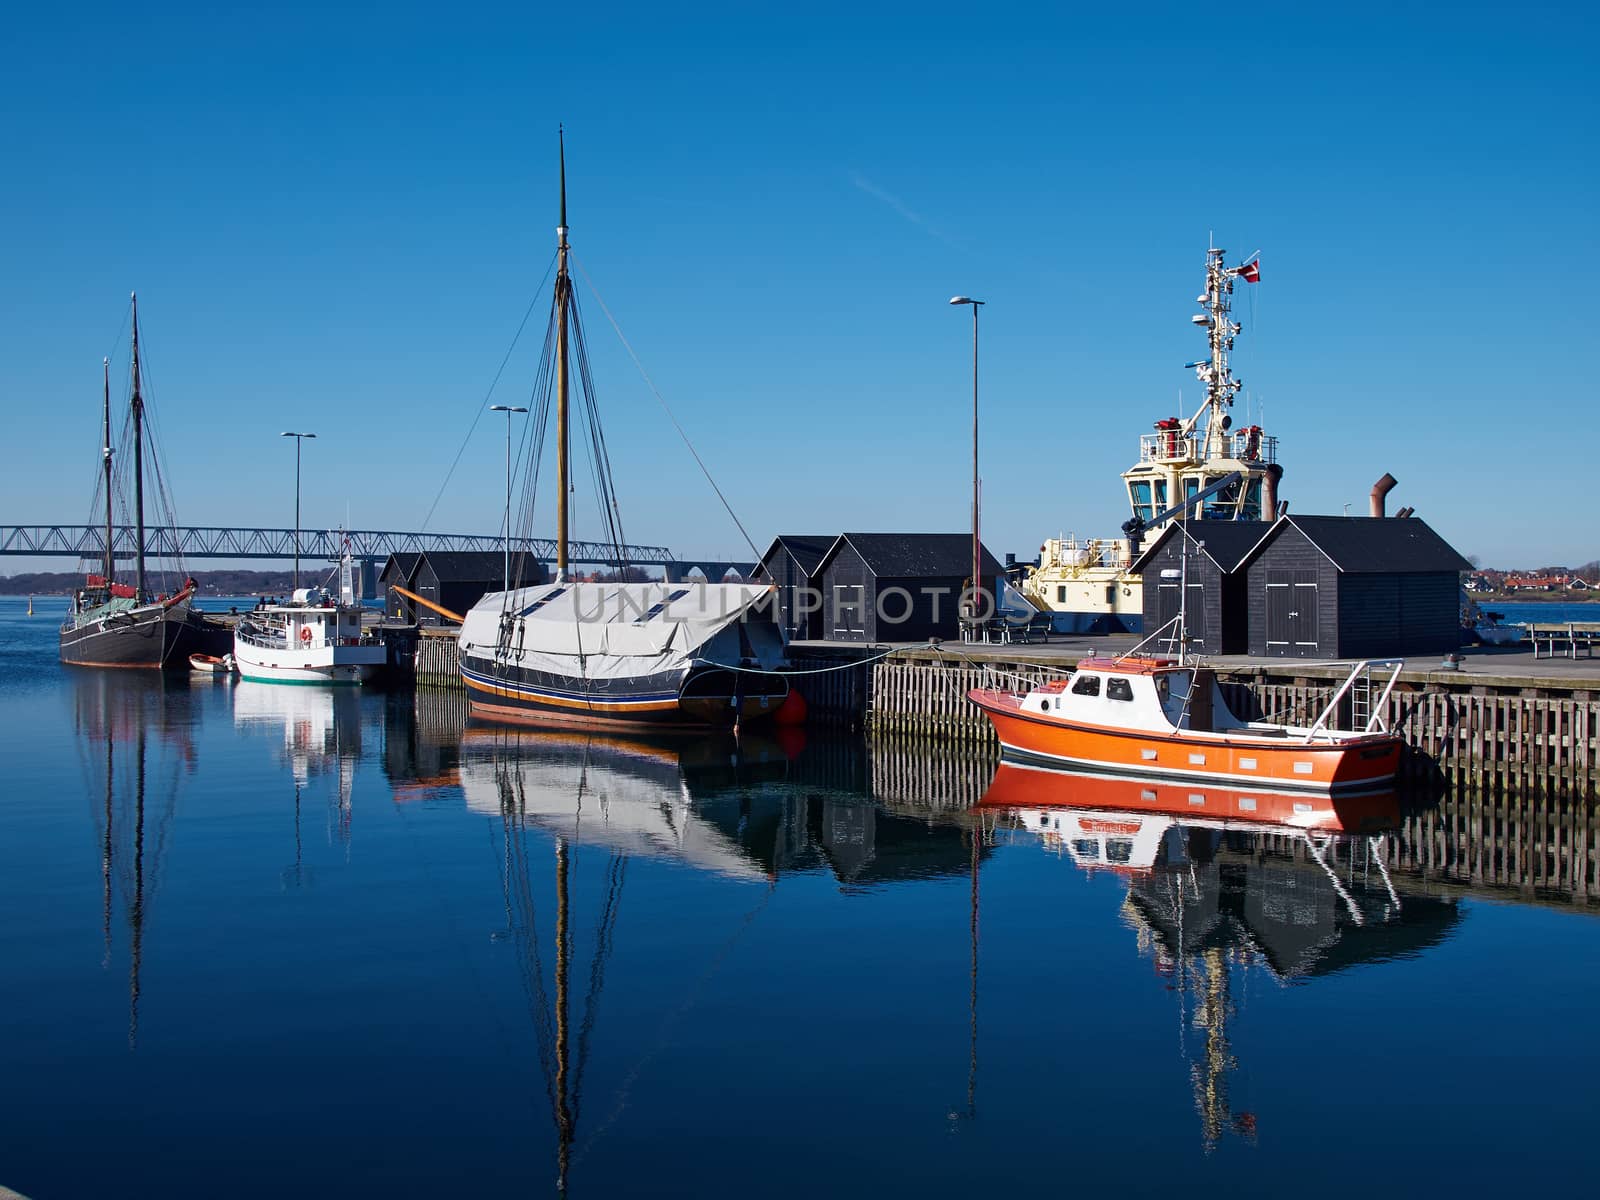 Marina old port in Middelfary Funen Denmark by Ronyzmbow